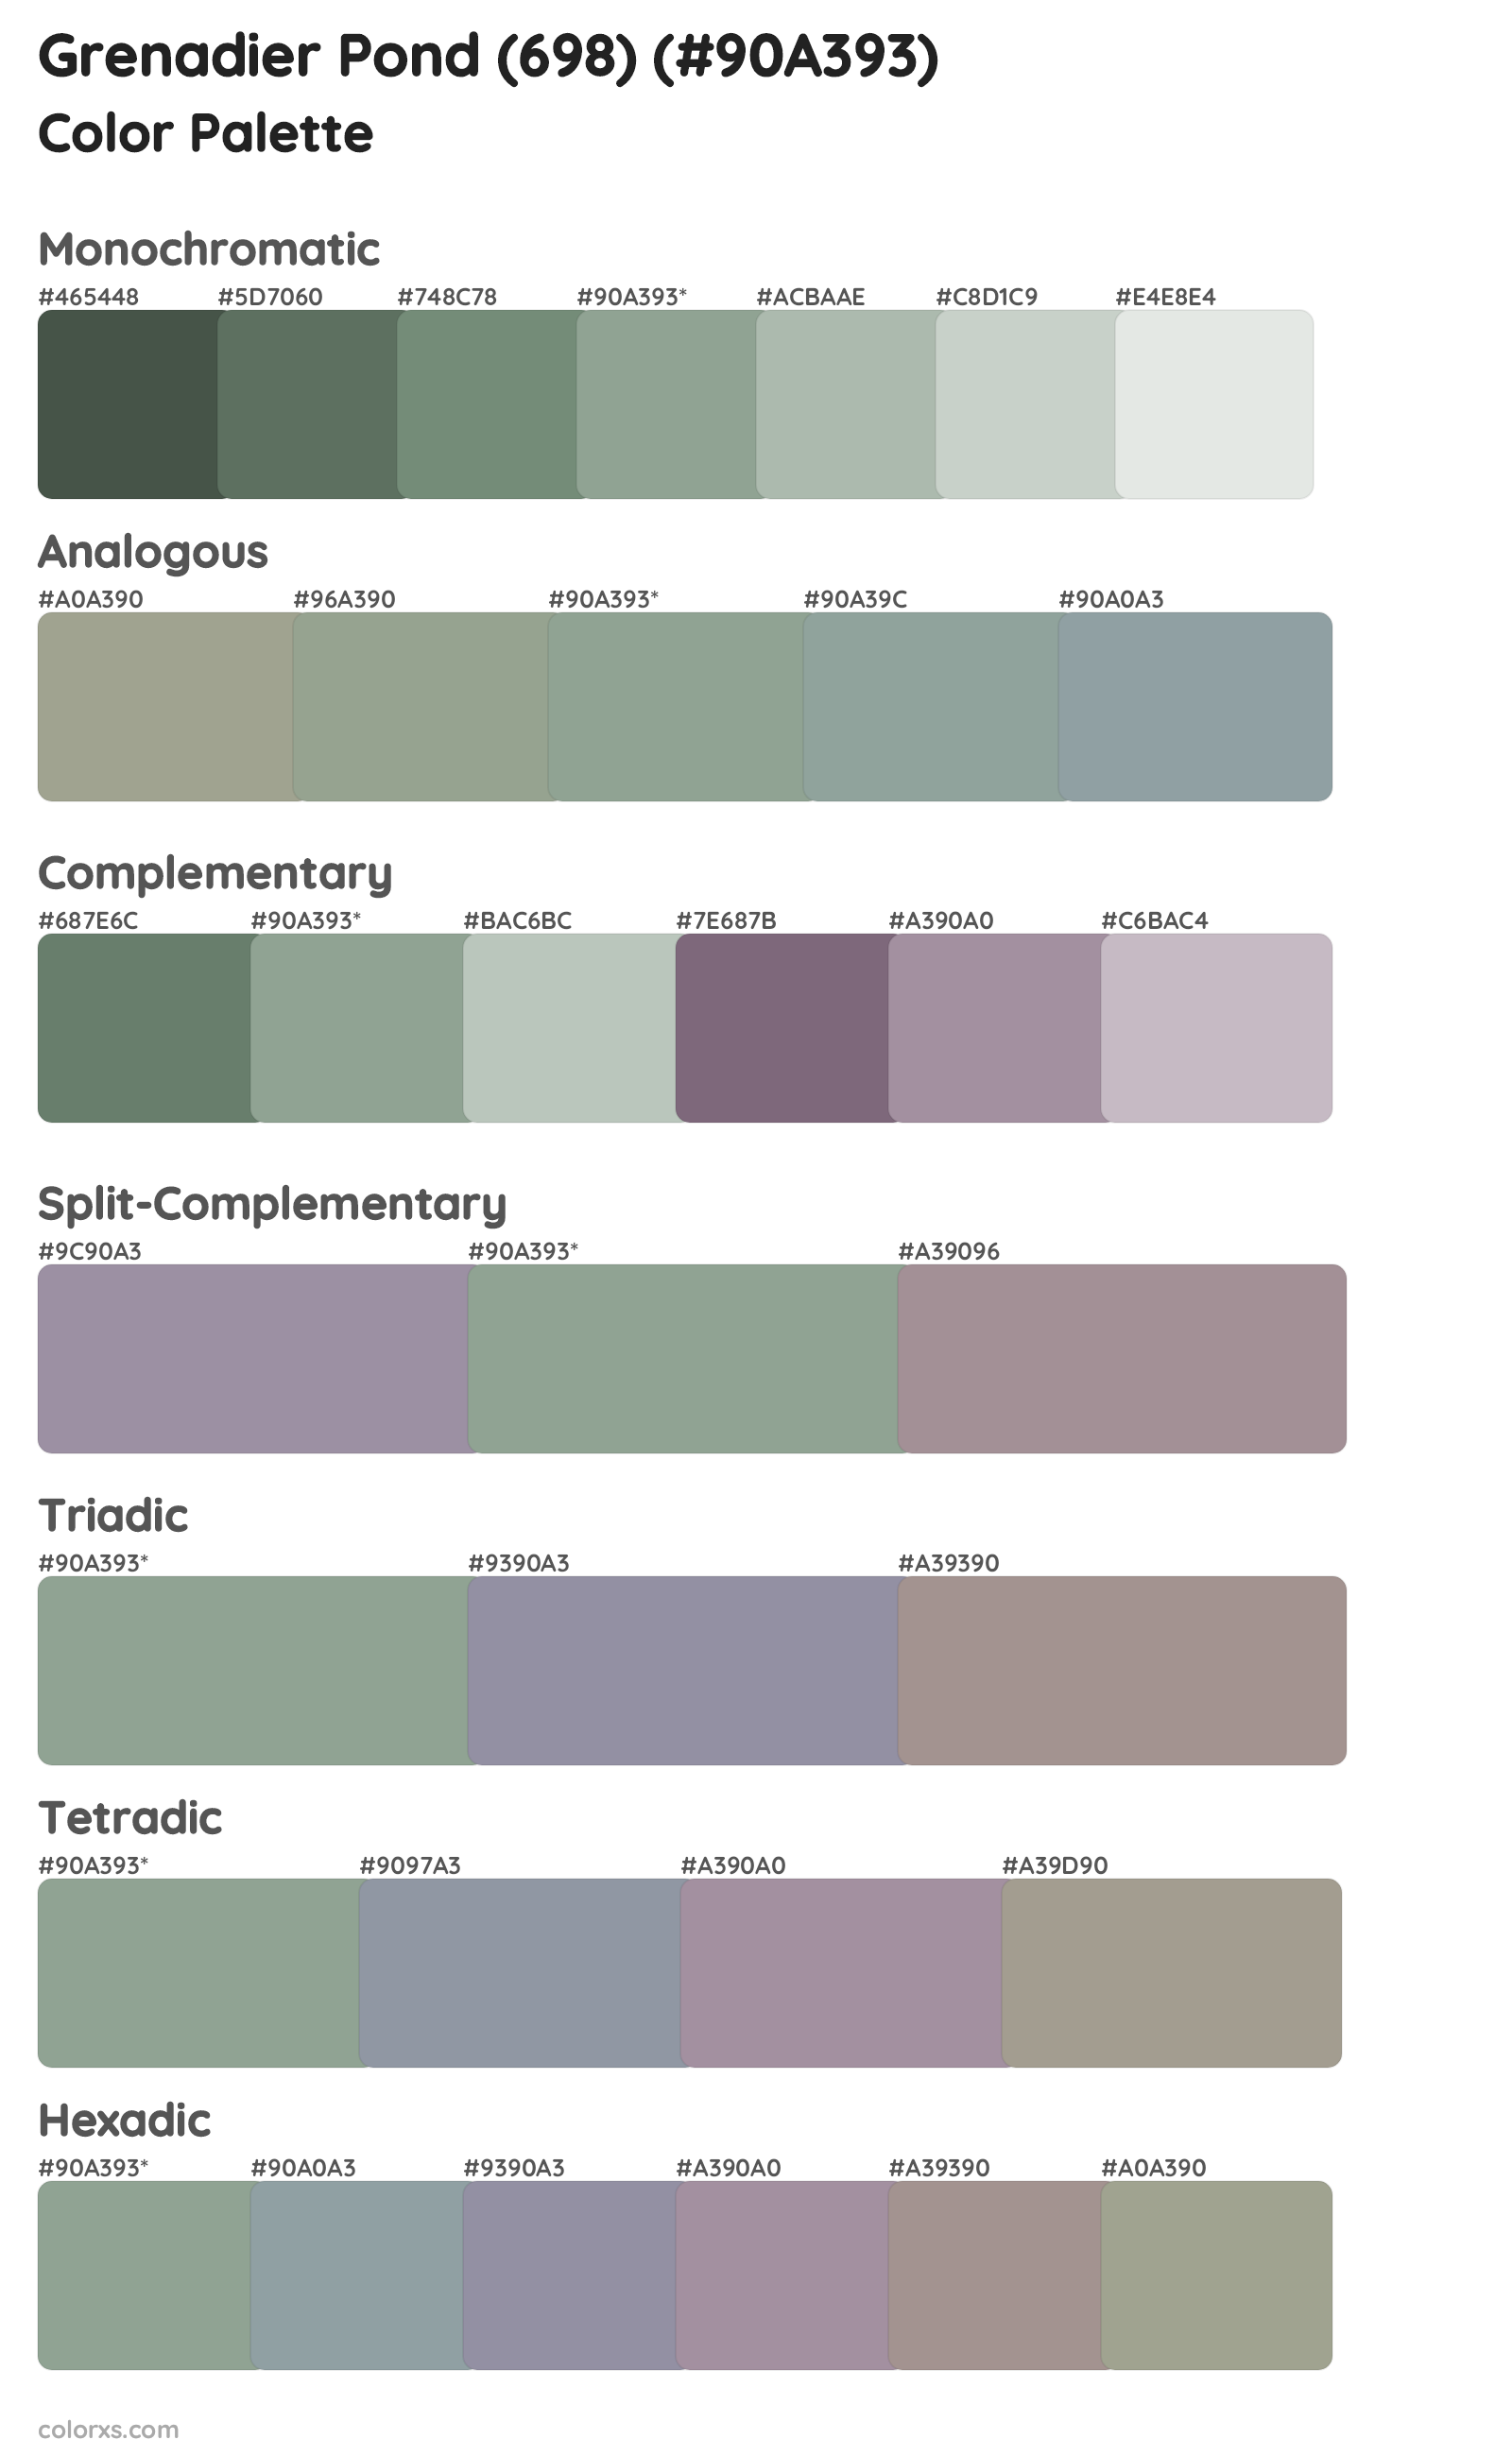 Grenadier Pond (698) Color Scheme Palettes